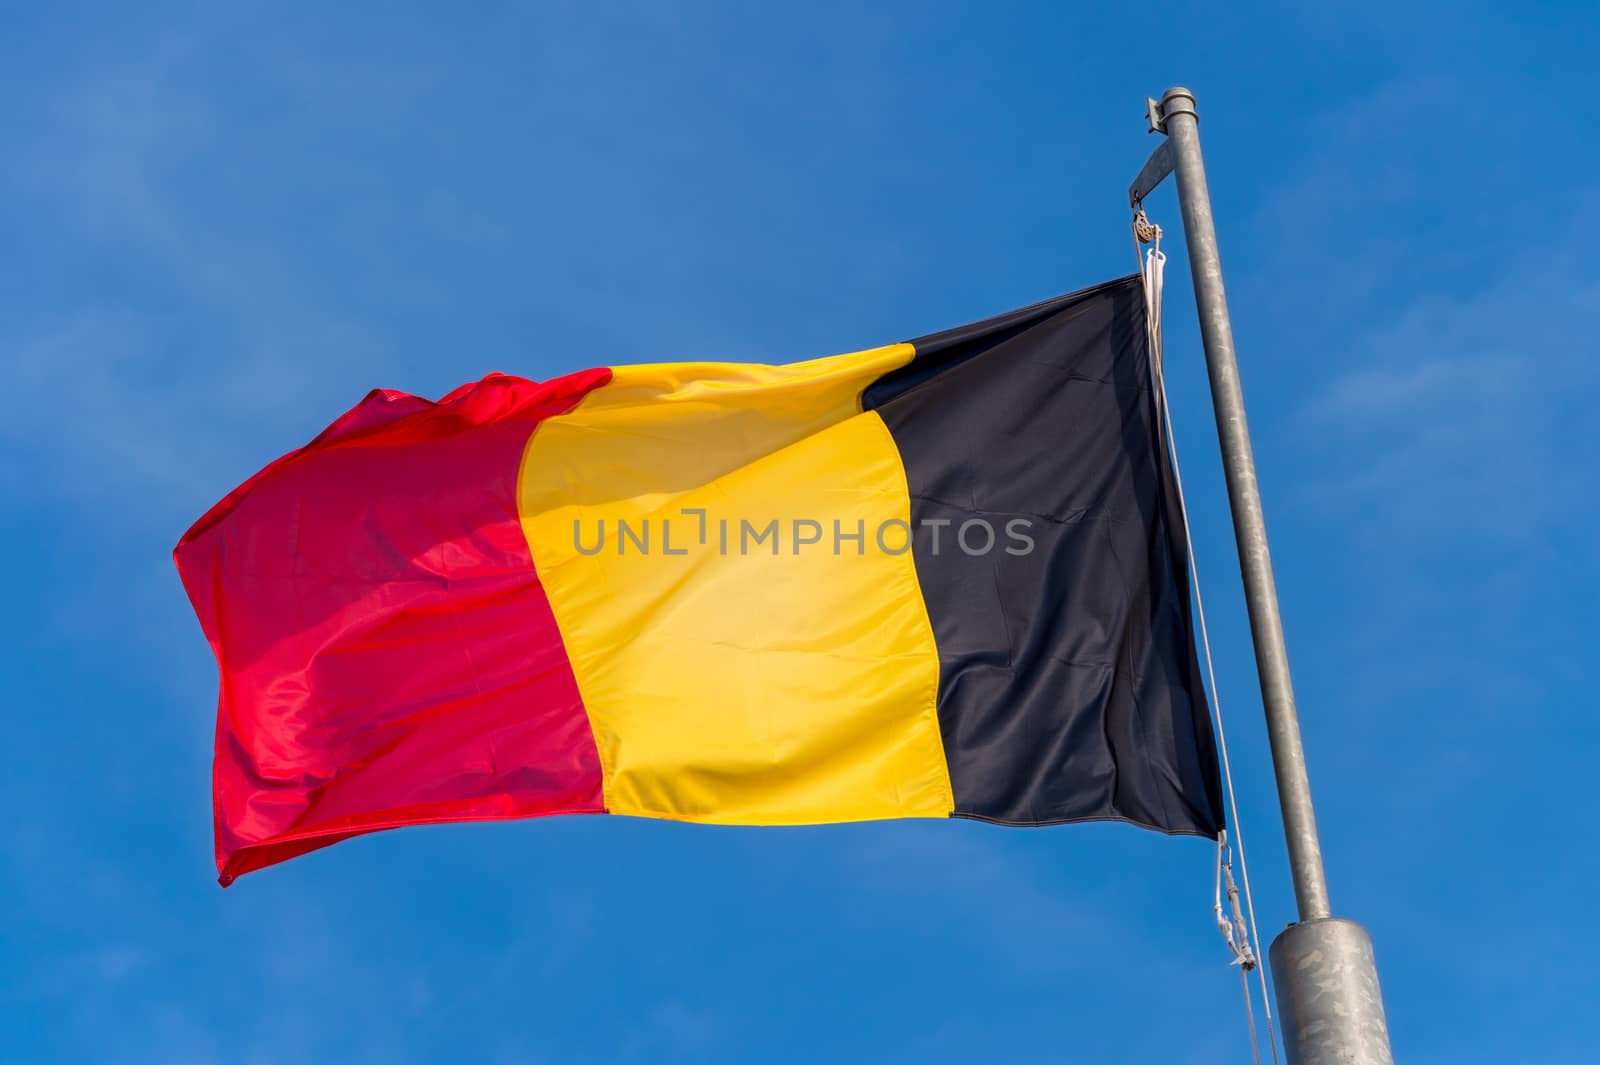 Belgian flag waving against blue sky in Boulogne sur Mer, France.